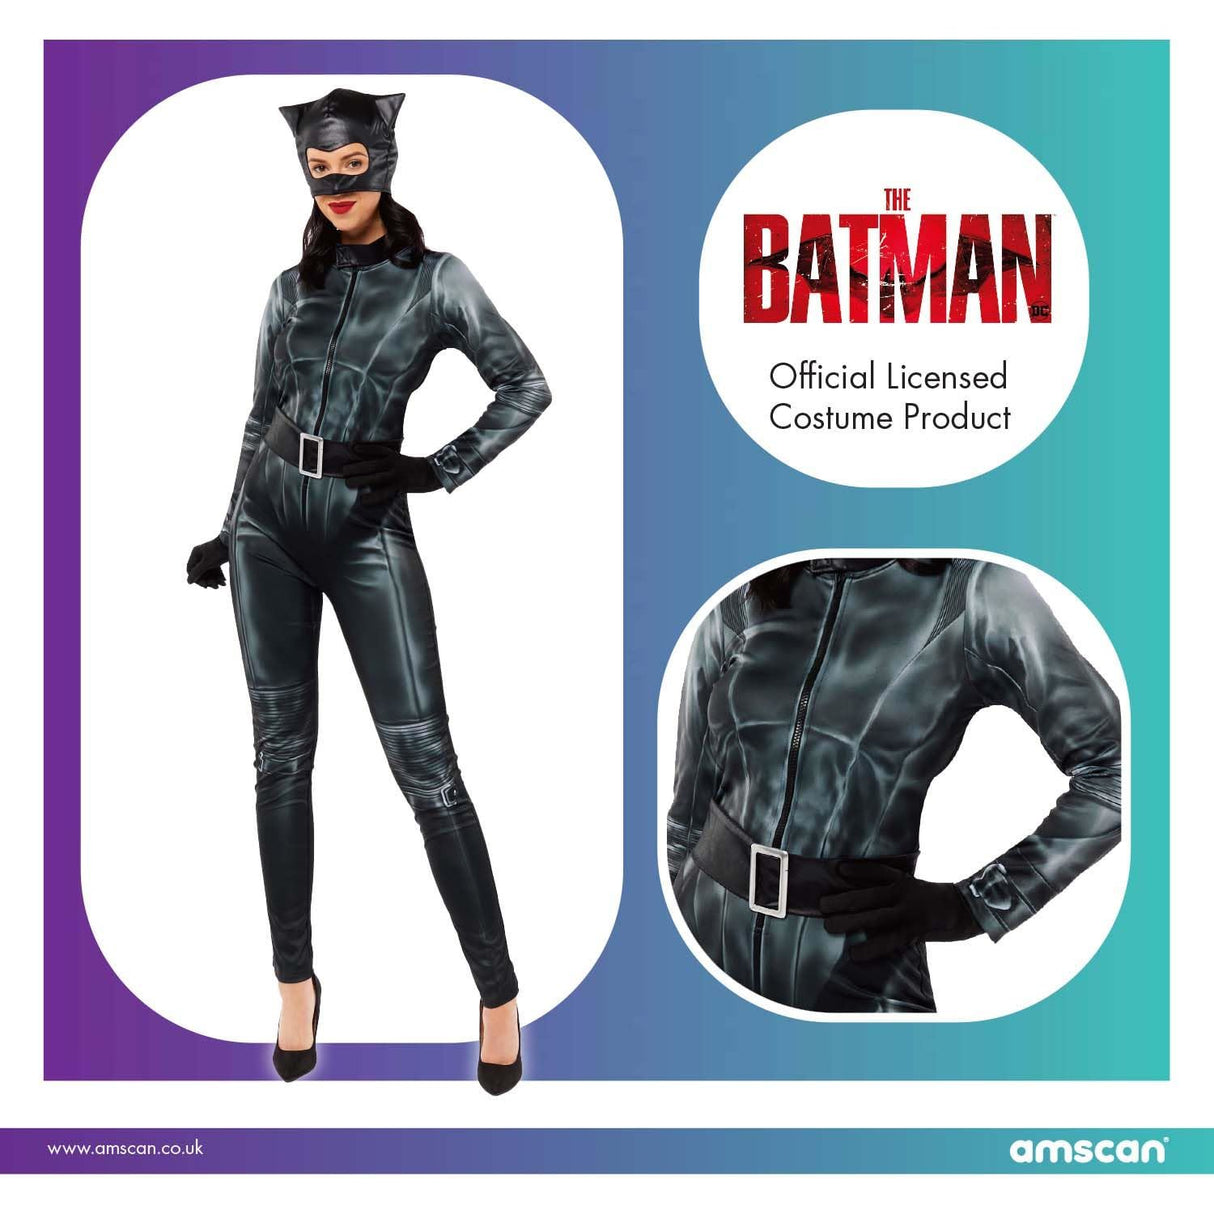 Ladies Catwoman Fancy Dress DC Comic Costume - S